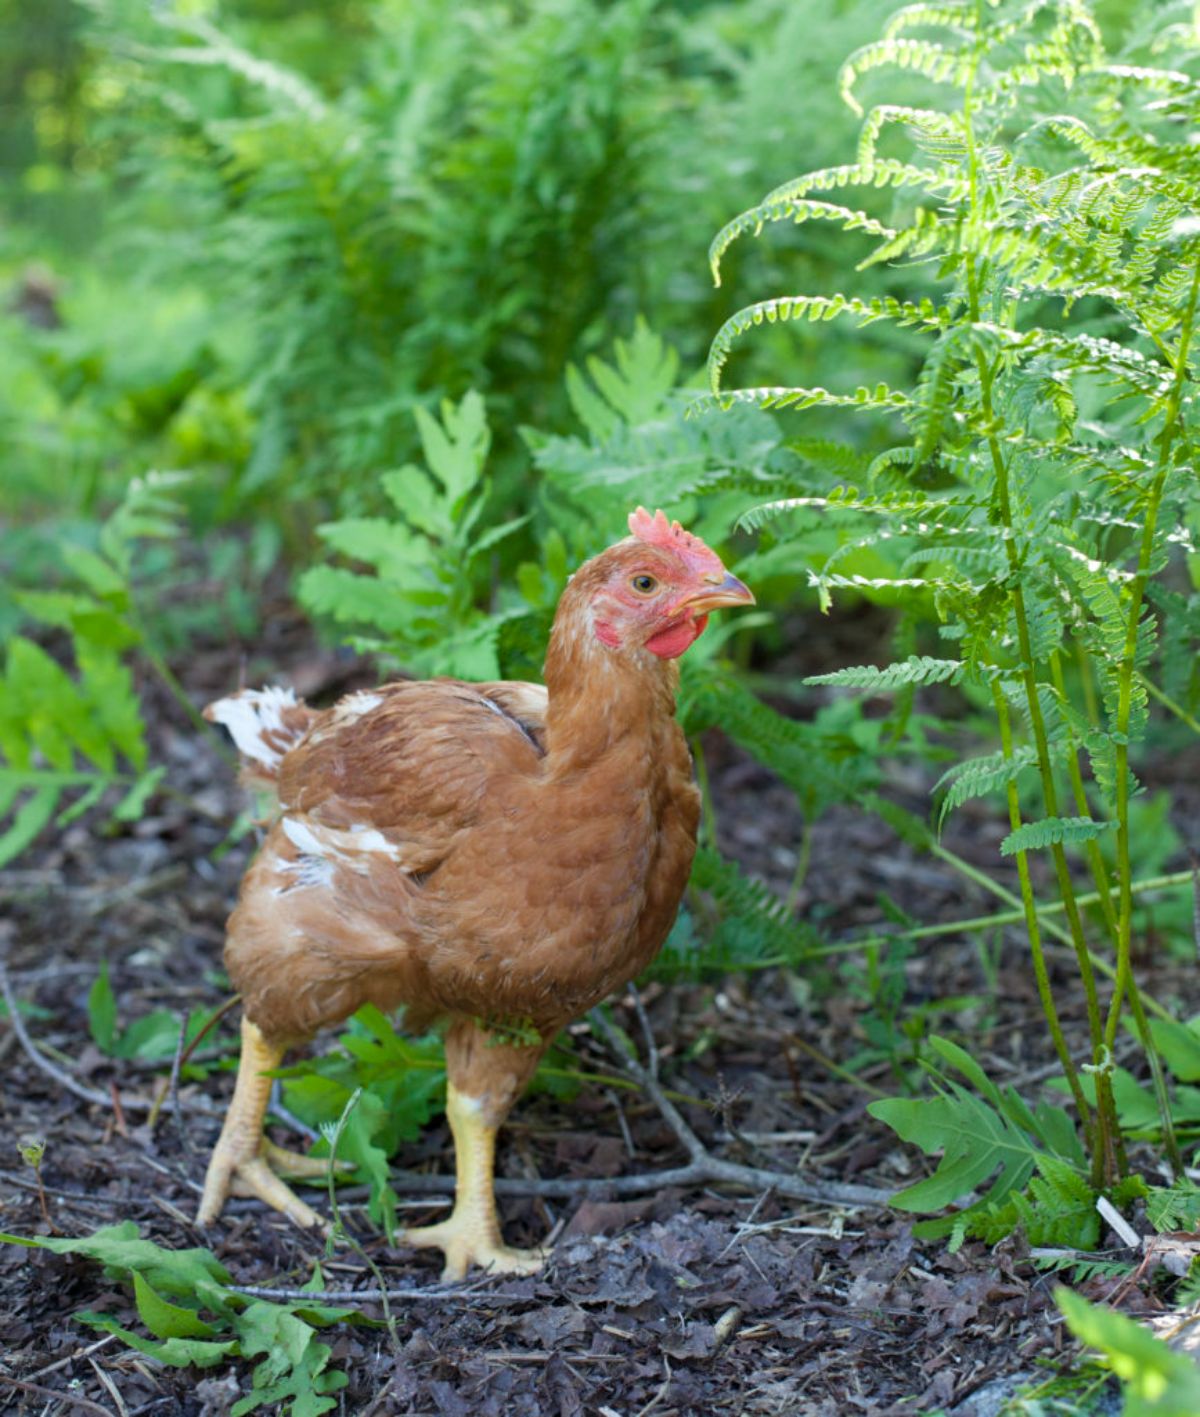 A young Red Ranger chicken in a backyard near ferns.